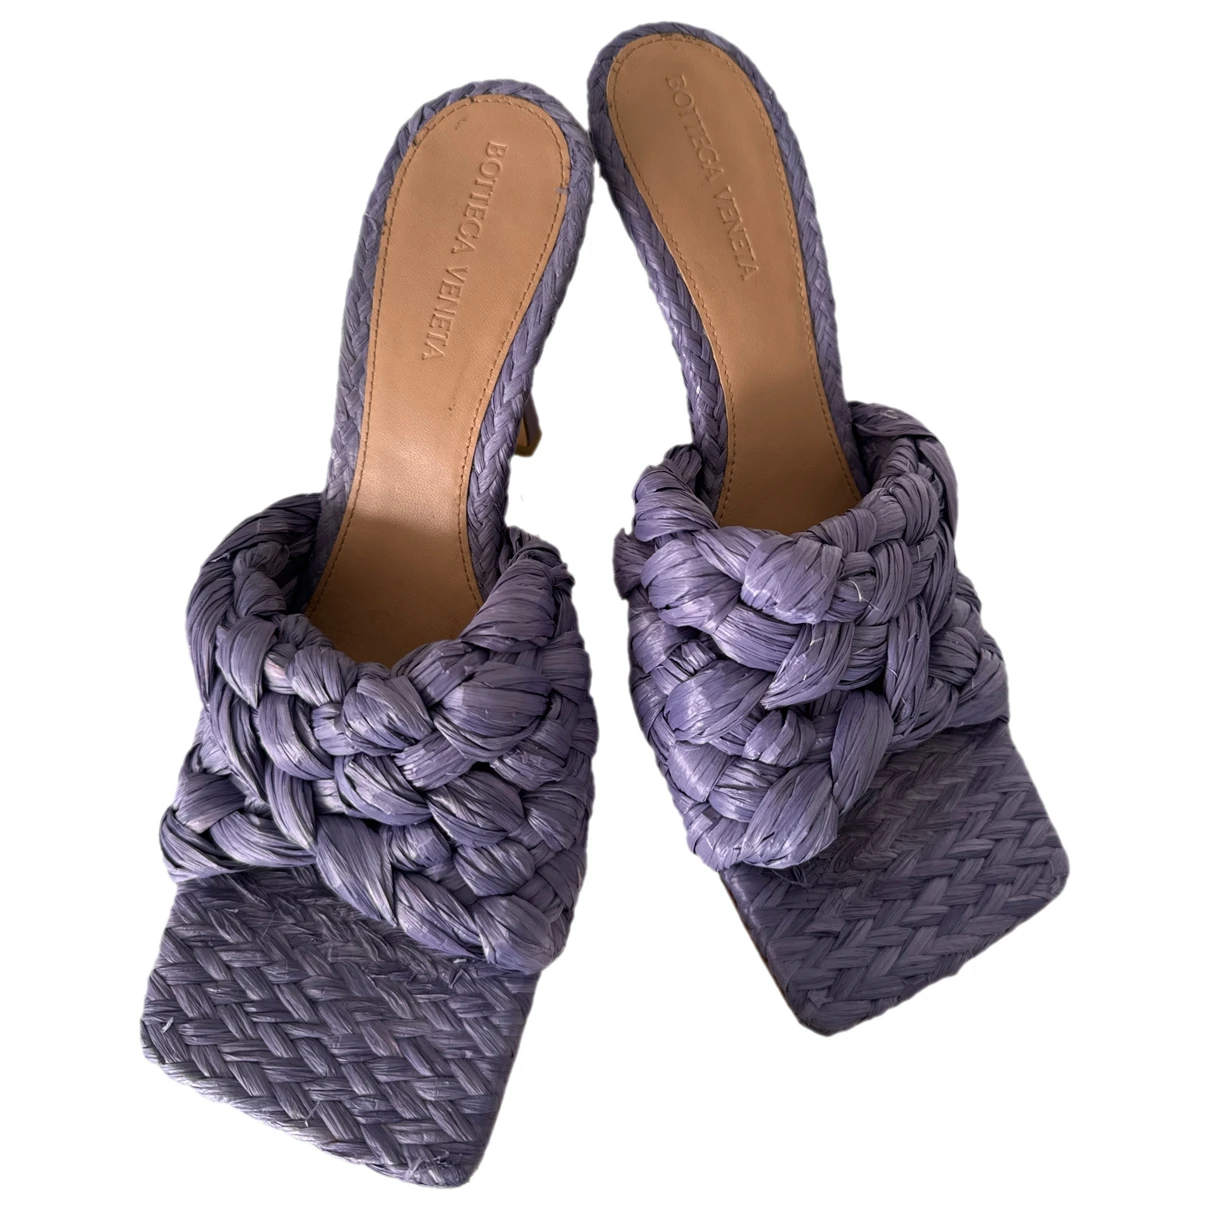 shoes Bottega Veneta sandals for Female Plastic 38.5 EU. Used condition